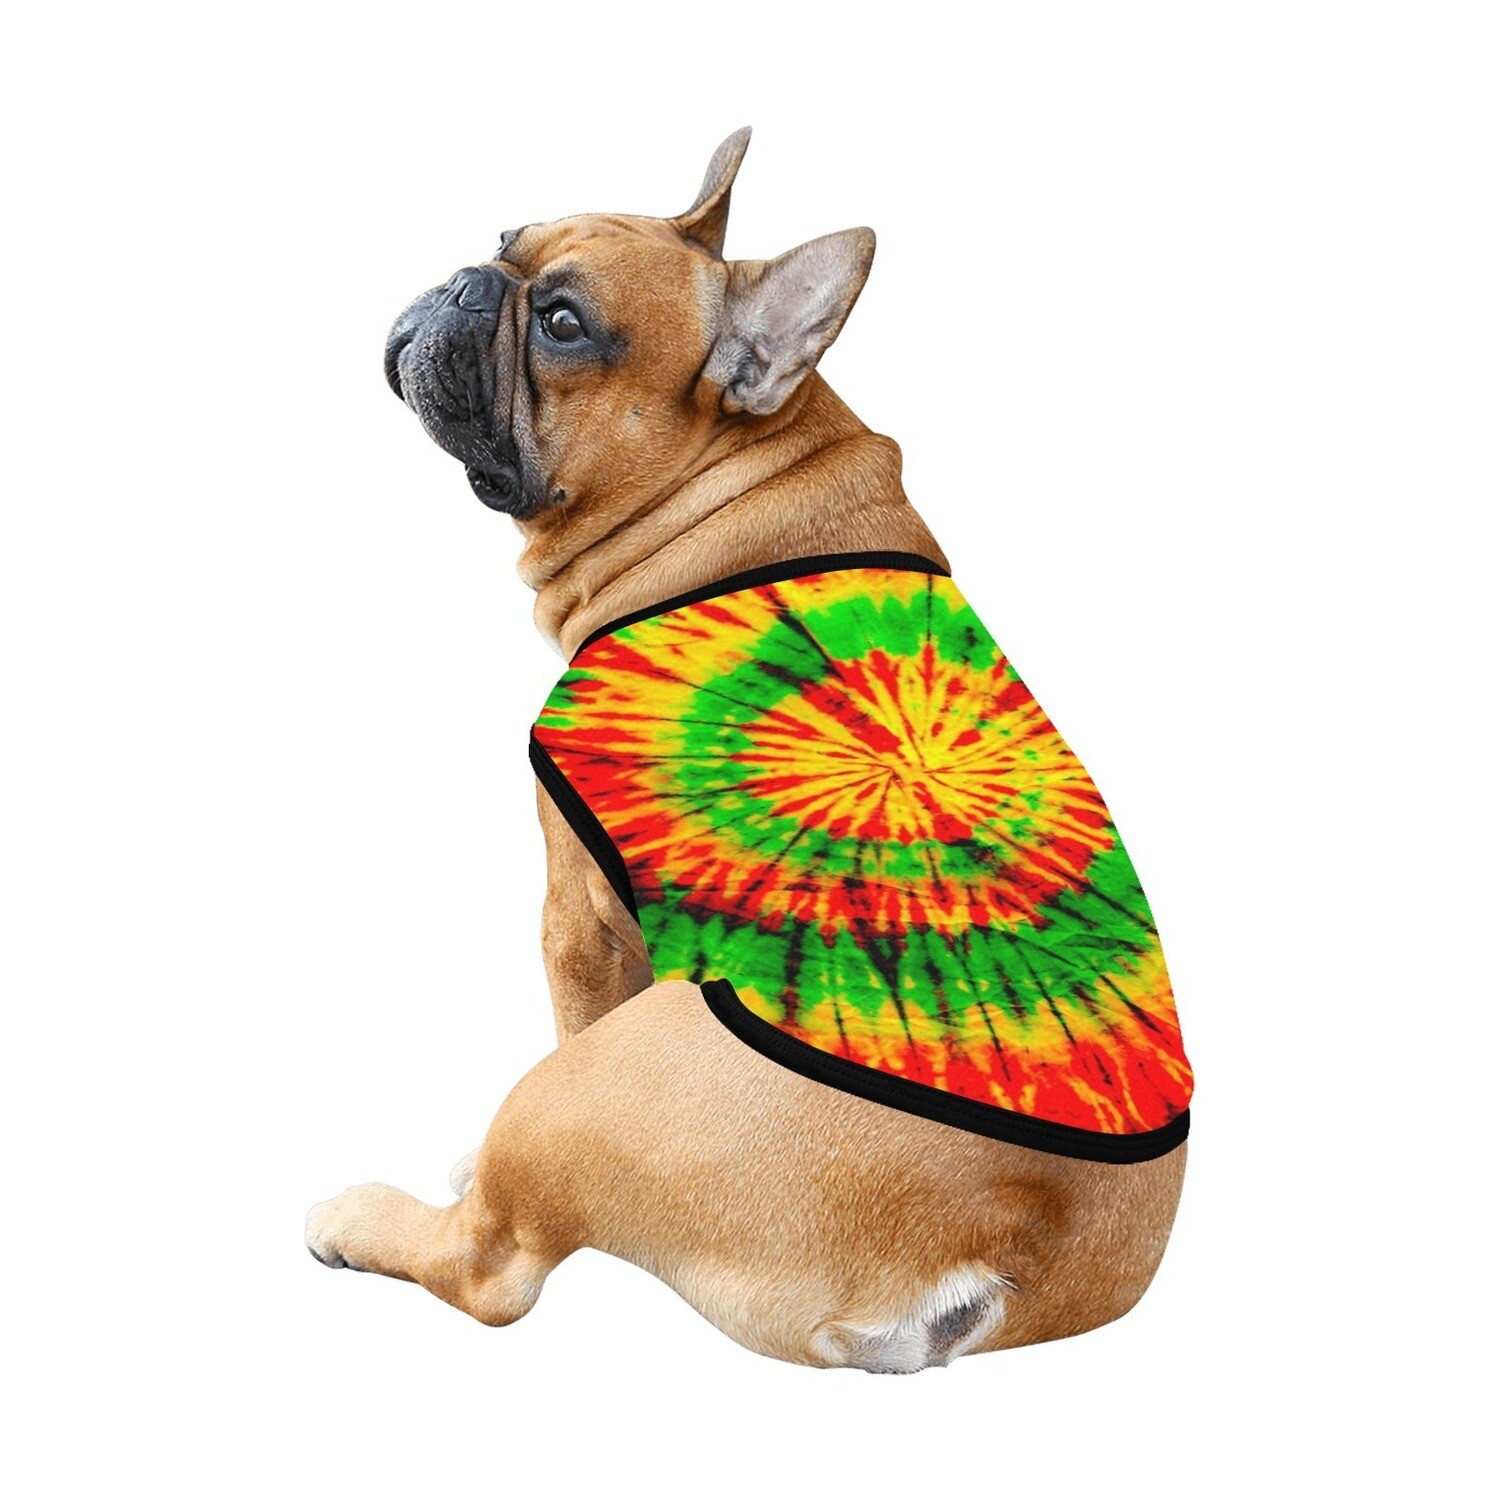 🐕☮︎ Dog t-shirt rasta Tie dye, Summer, Hippie dog shirt, dog clothes, dog tank top, dog clothing, dog gift, dog costume, 7 sizes XS to 3XL, gift